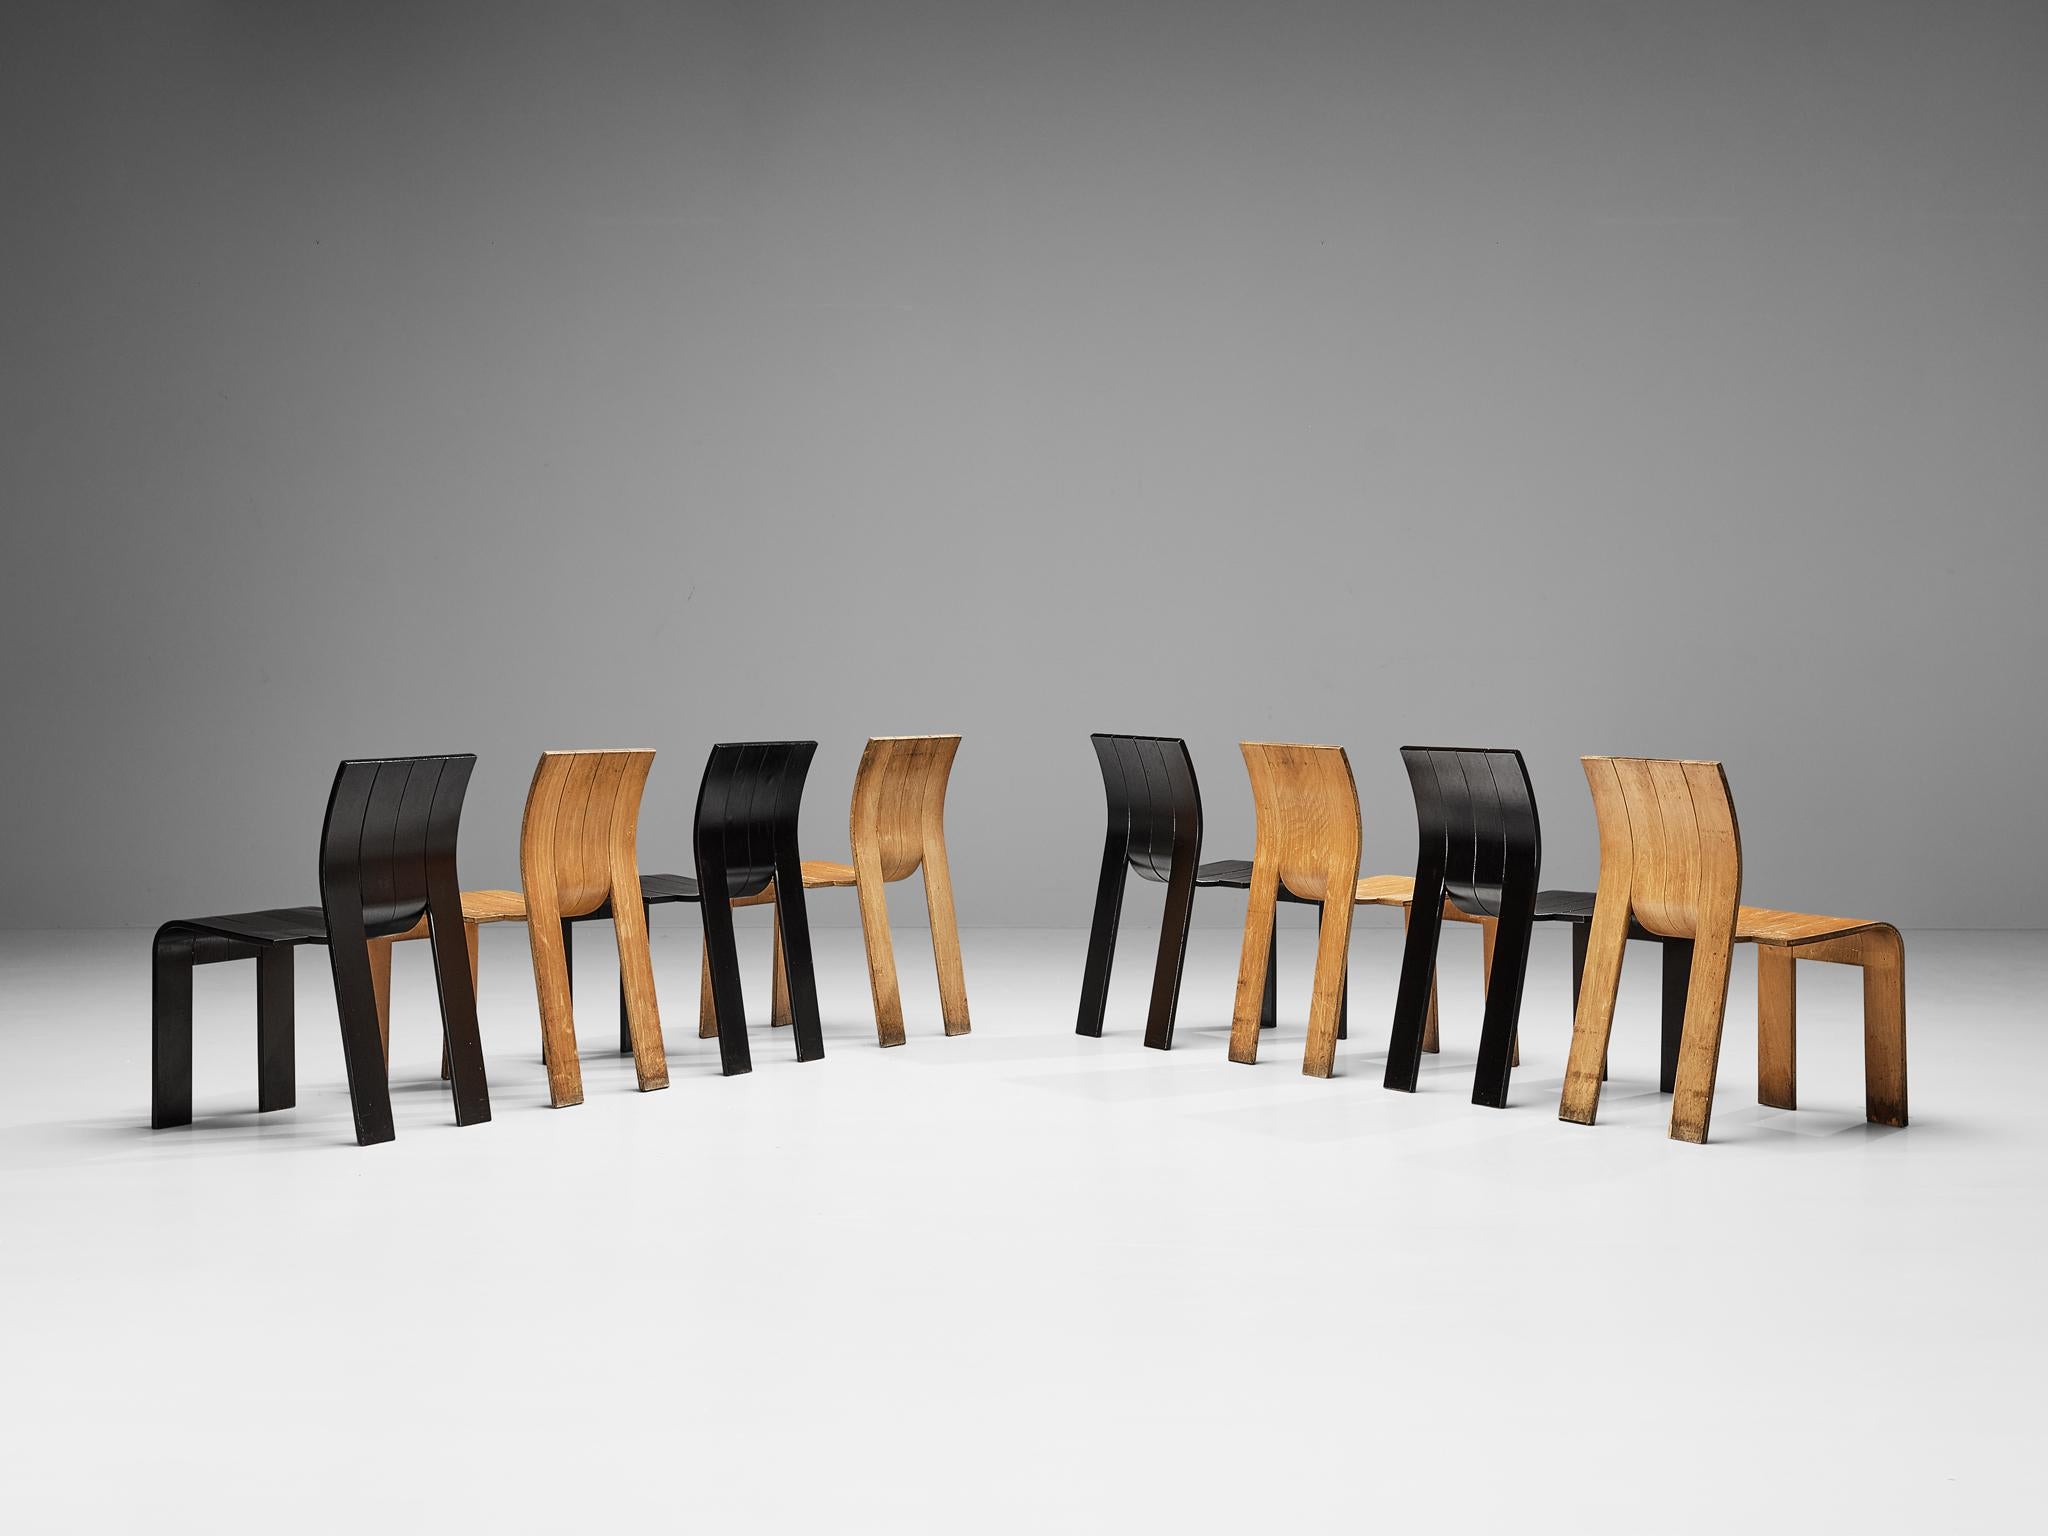 Gijs Bakker for Castelijn, set of ten 'Strip' dining chairs, different colors, beech, The Netherlands, design 1974

- 10 x Gijs Bakker 'Strip chairs at $1150 each. Total: $11,500
- 2 x Gijs Bakker 'Strip chairs with arms $1750
- Alternations: $2,670